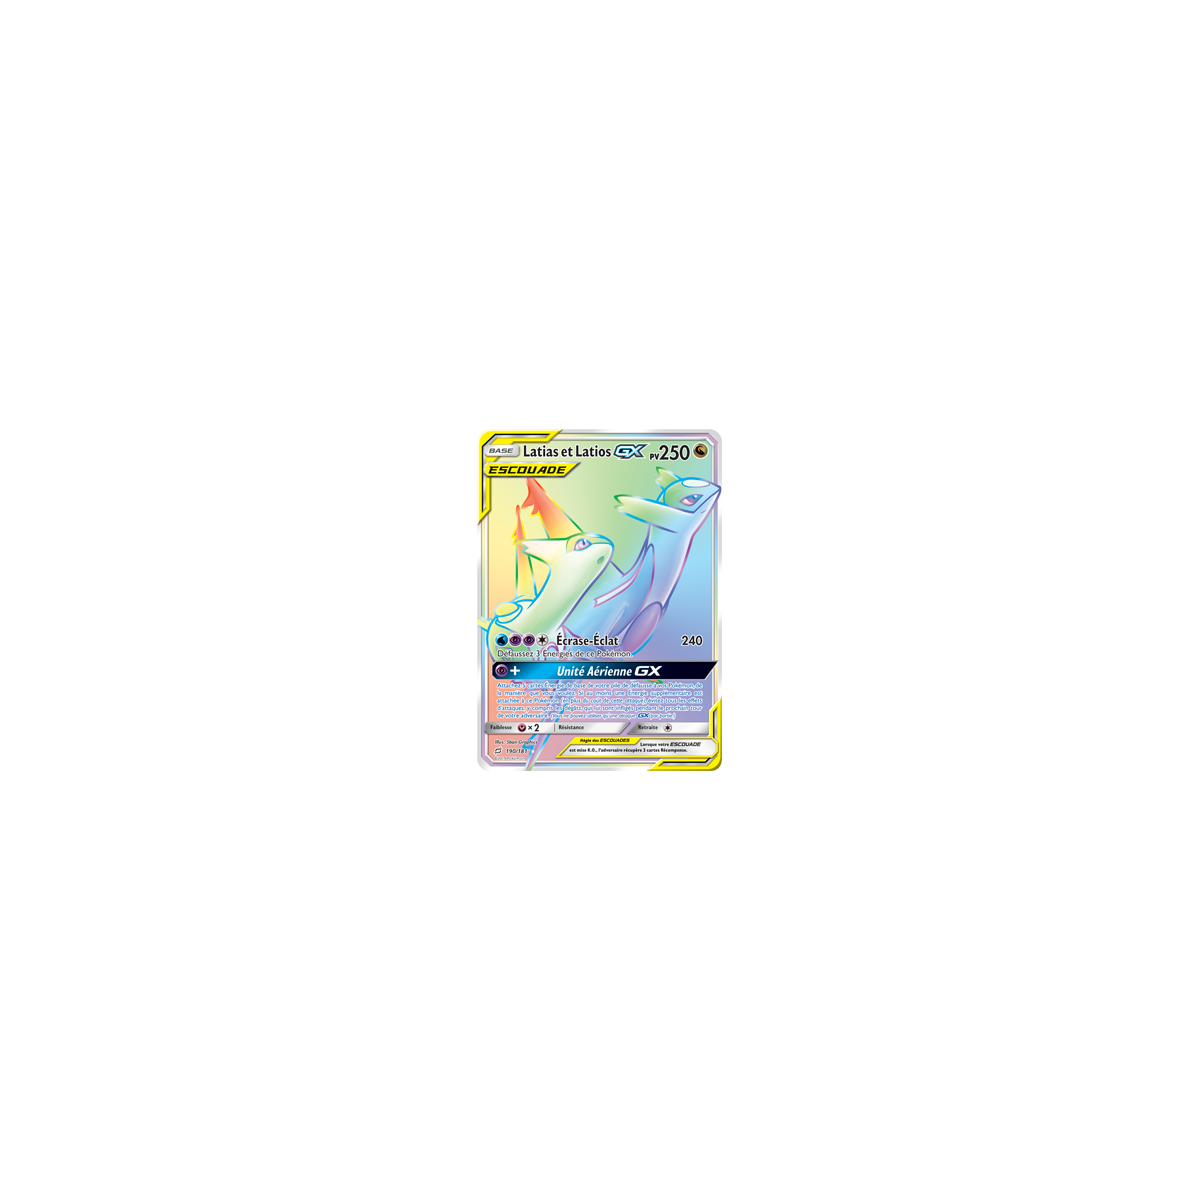 Carte Latias et Latios - Arc-en-ciel rare de Pokémon Duo de Choc 190/181